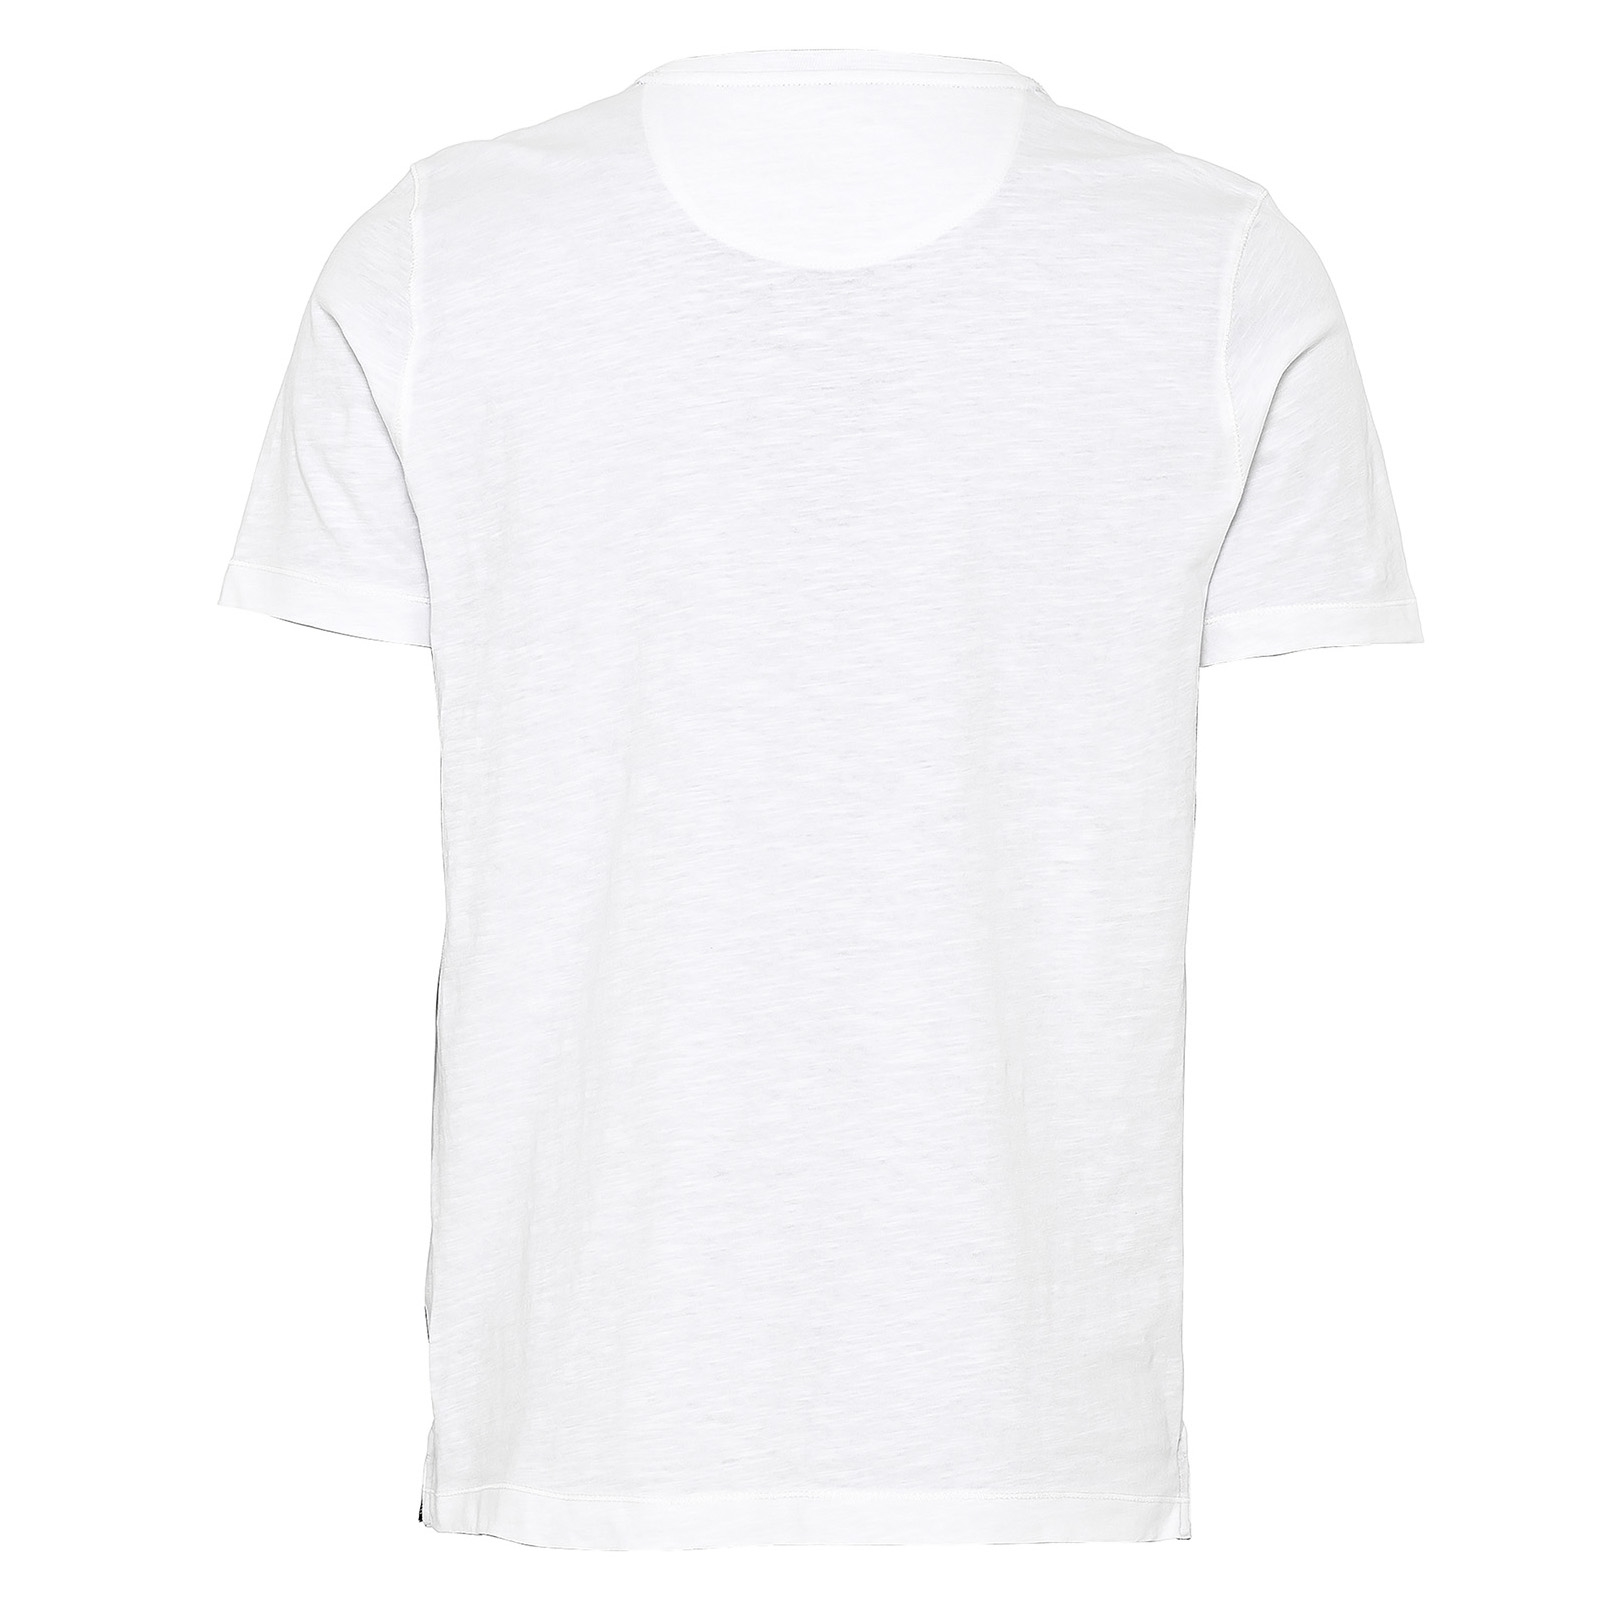 Camel active Herren Henley T-Shirt Shirt kurzarm Knopfleiste weiß unifarben 9T04409474 01